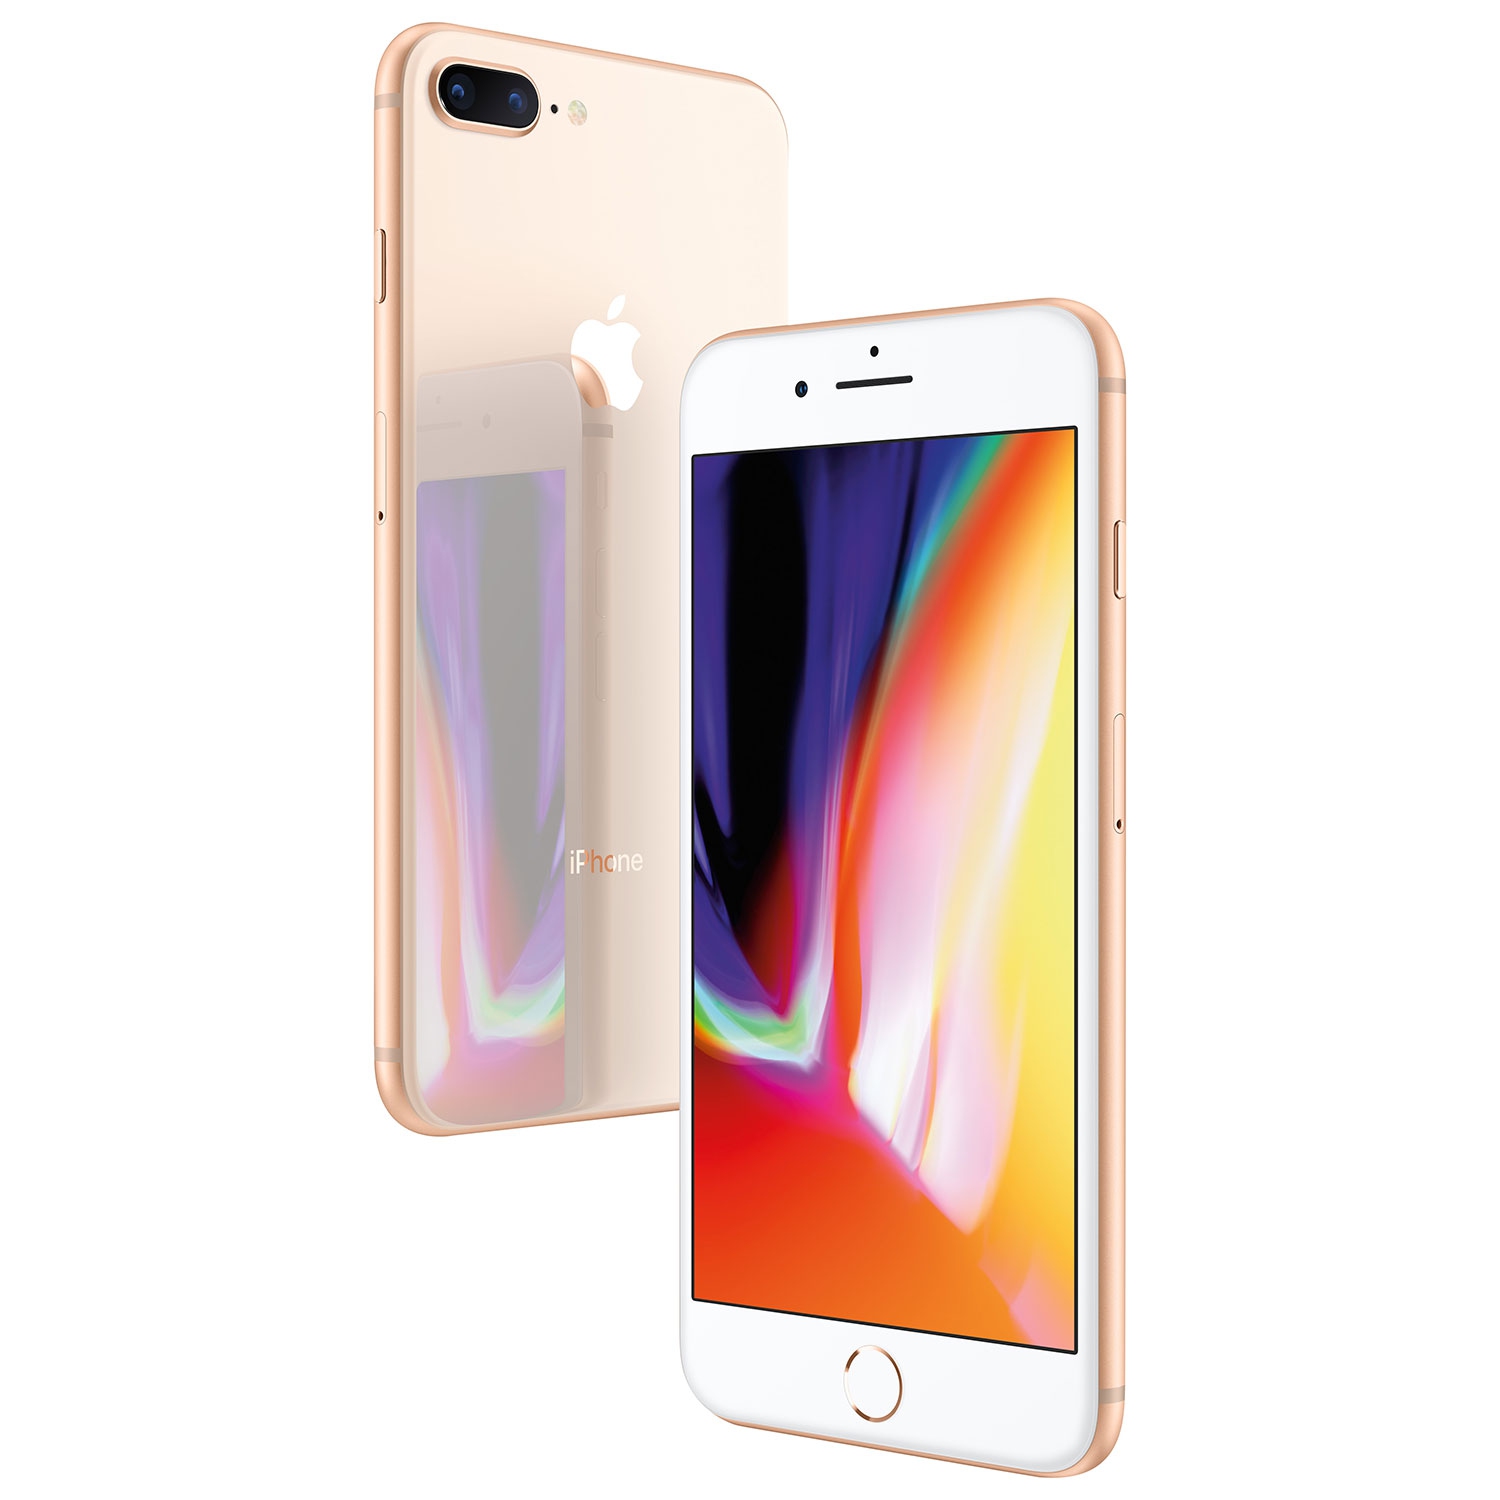 Refurbished (Excellent) - Apple iPhone 8 Plus 64GB Smartphone - Gold - Unlocked - Certified Refurbished